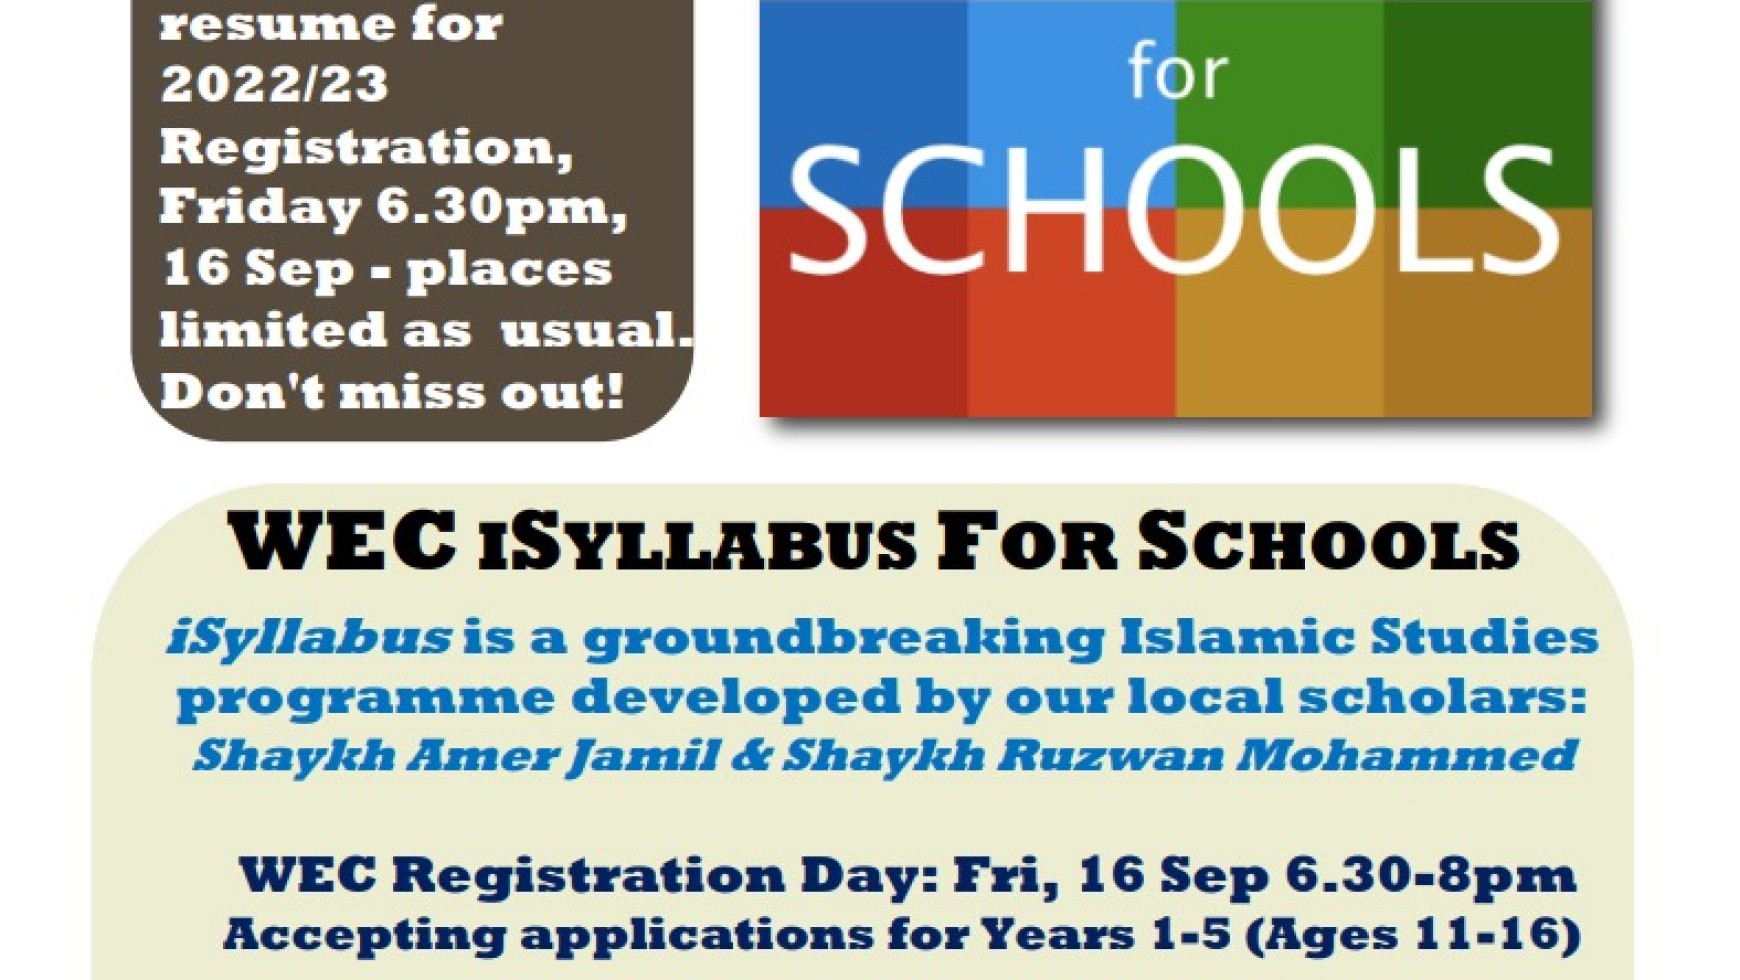 WEC iSyllabus for Schools